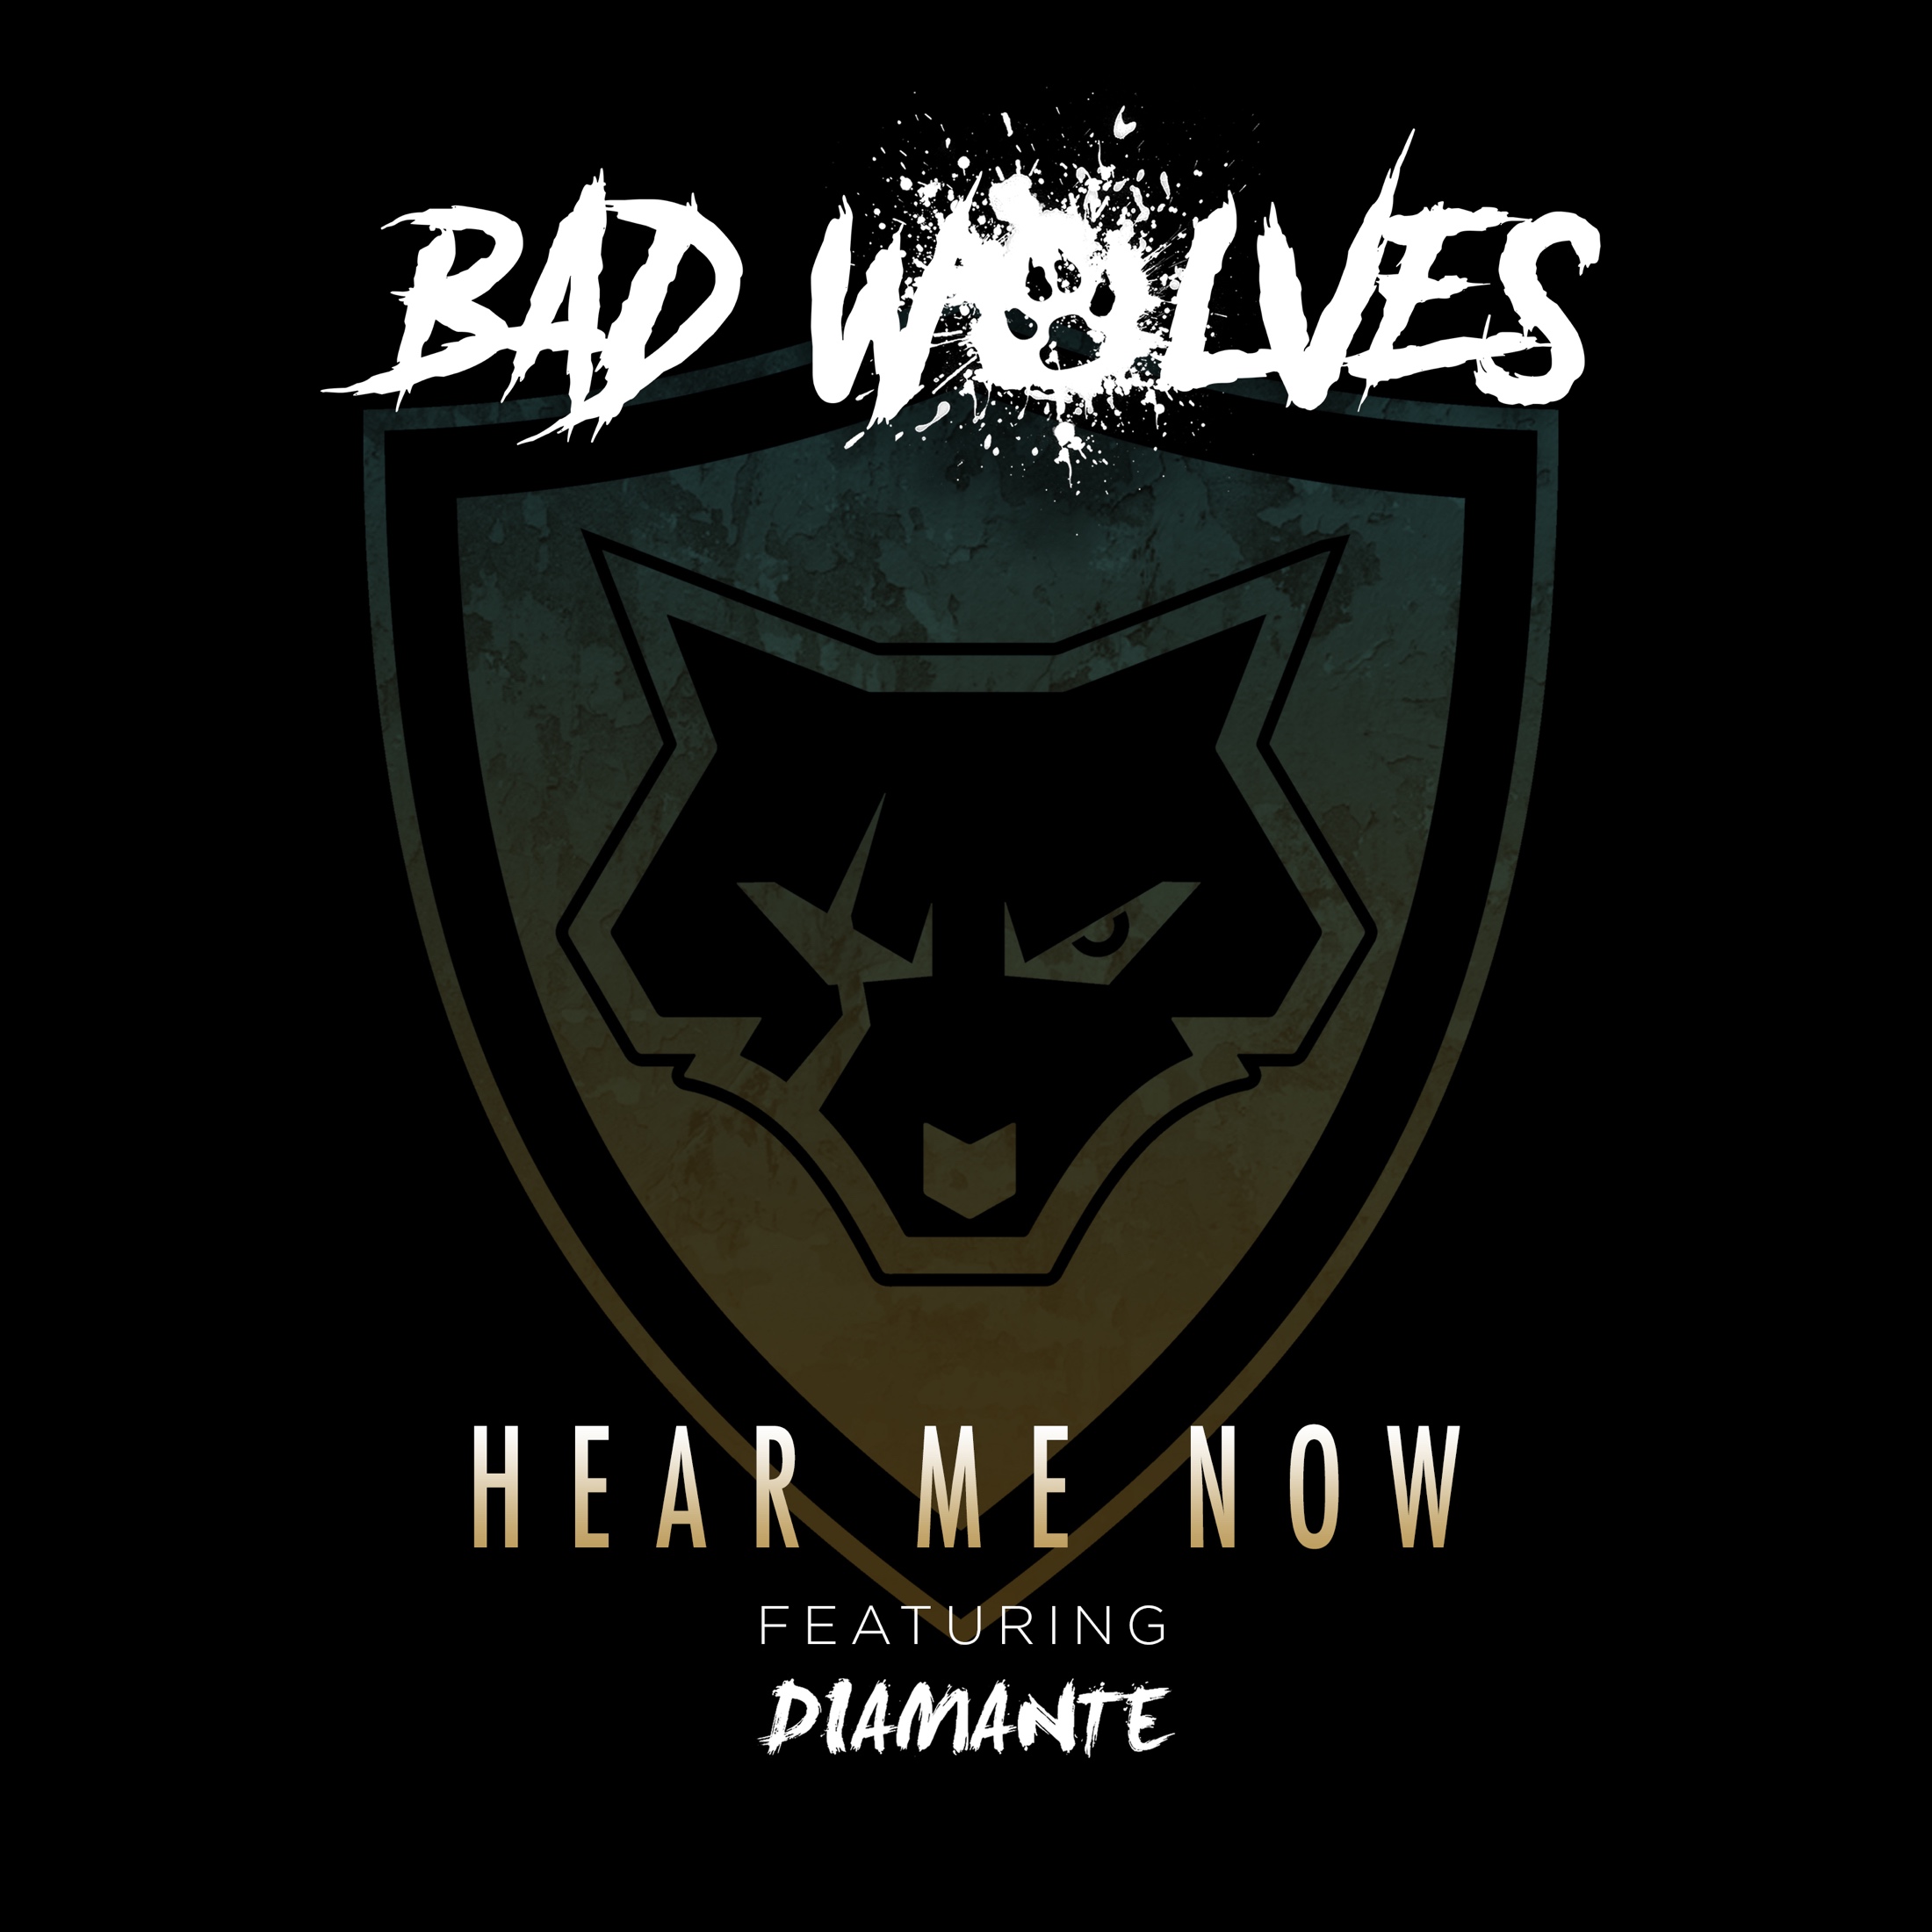 Bad Wolves Drop Surprise Track Hear Me Now Featuring Diamante